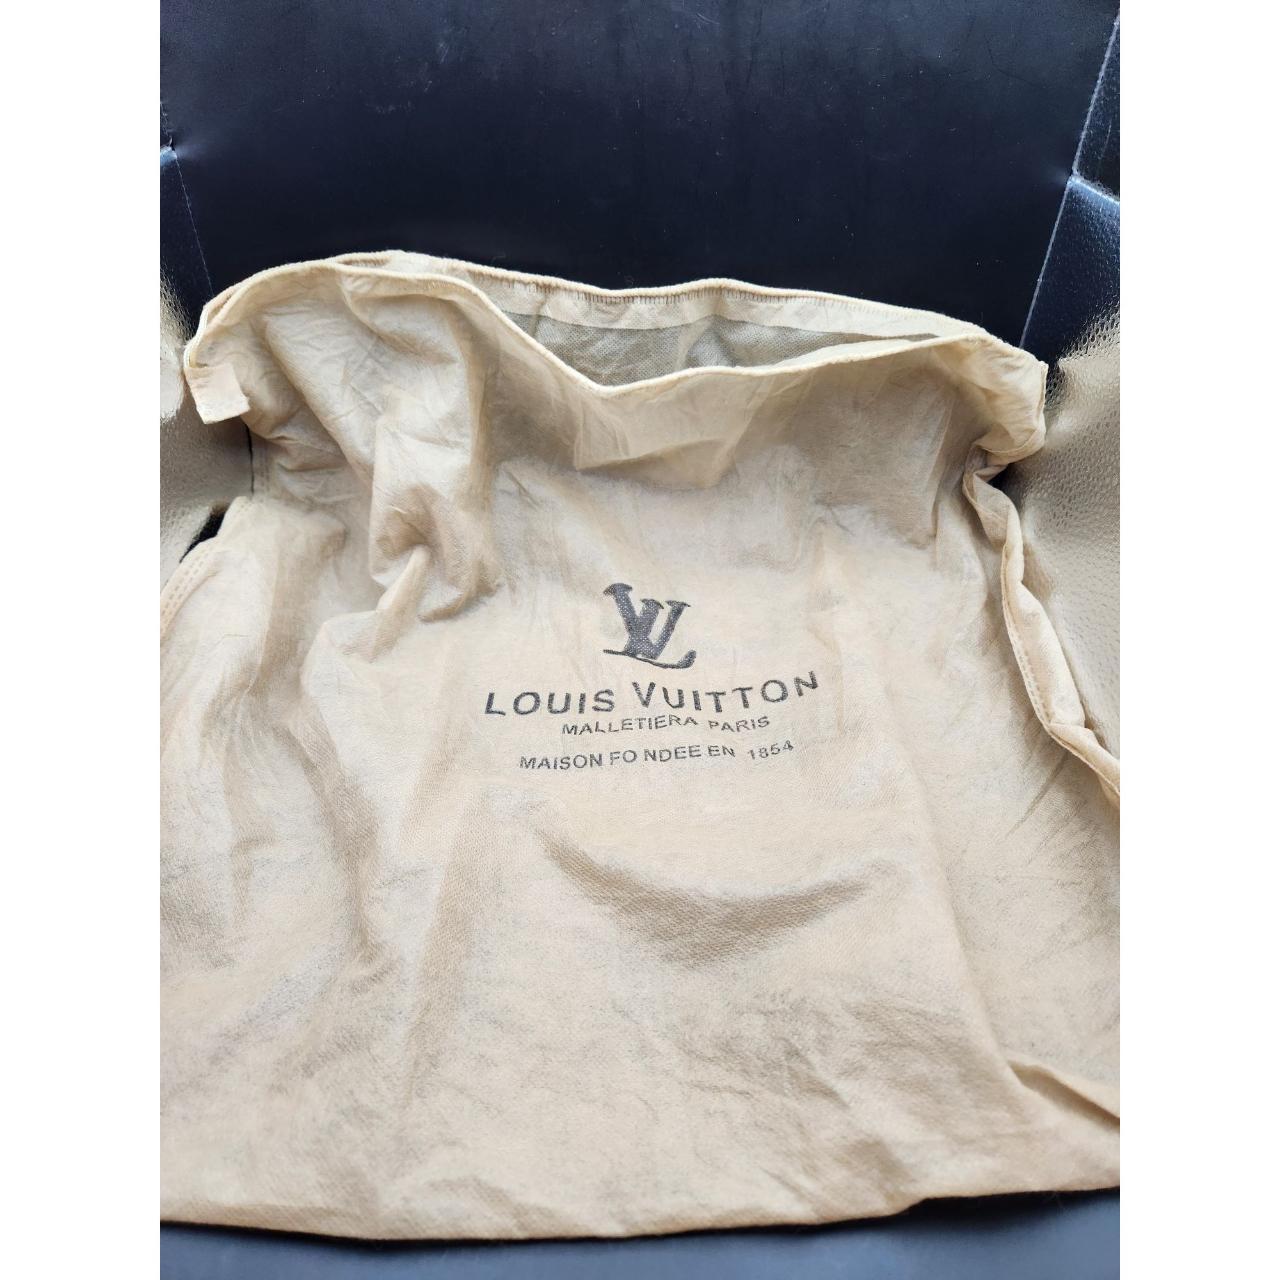 Louis Vuitton, Other, Louis Vuitton Malletiera Paris Maison Fondeeen 854  Tan Brown Dustbag Cover